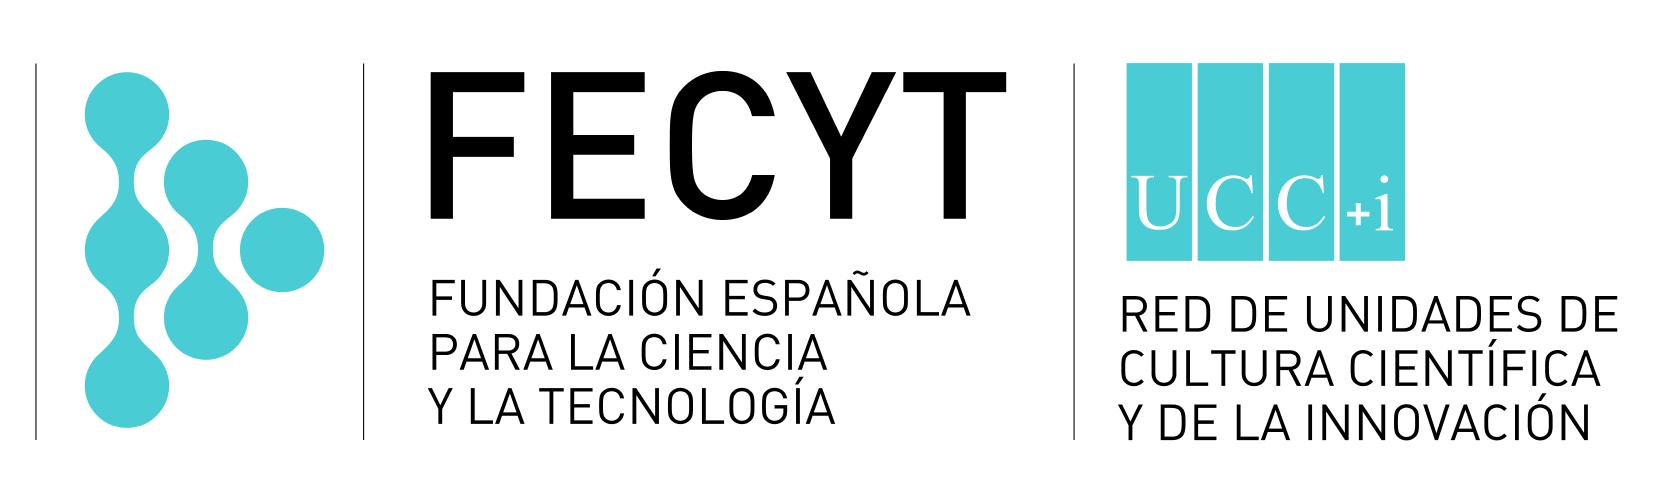 logo ucc